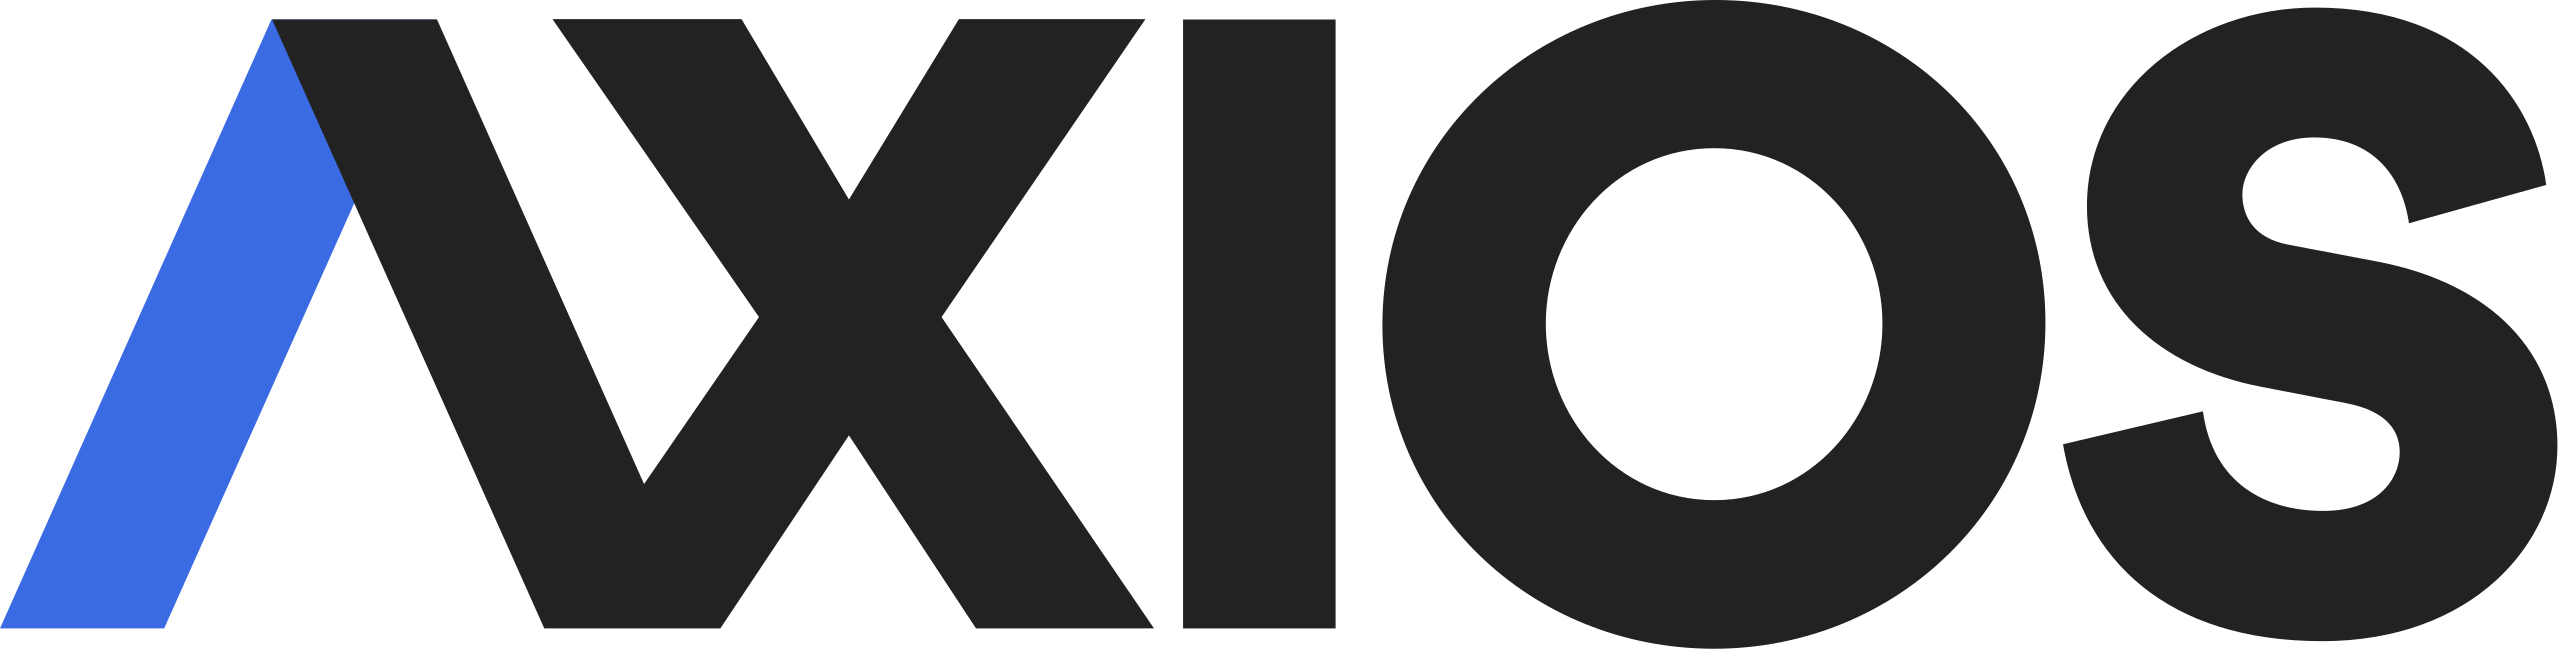 Logo of Axios